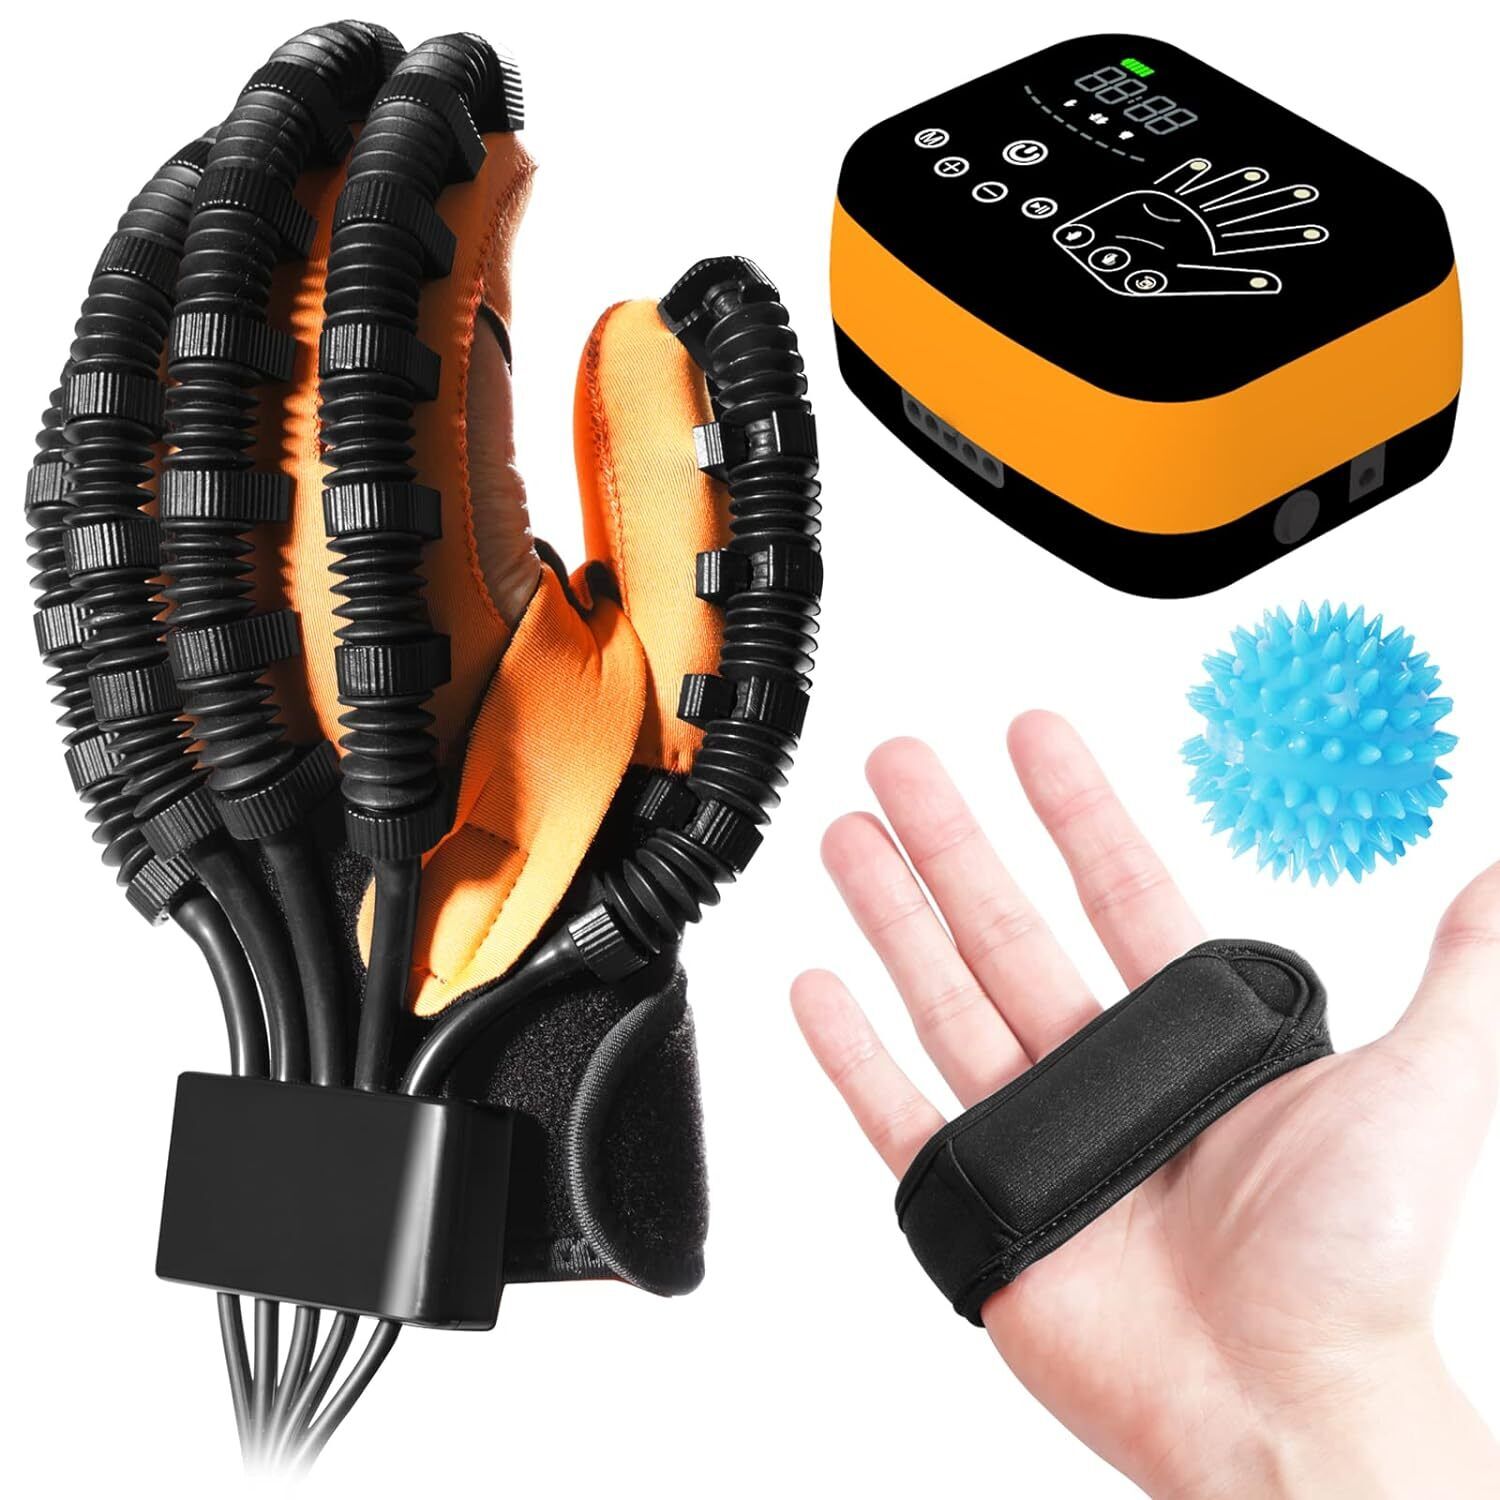 Hand Function Rehabilitation Robotic Gloves For Stroke Hemiplegia Rehabilitation